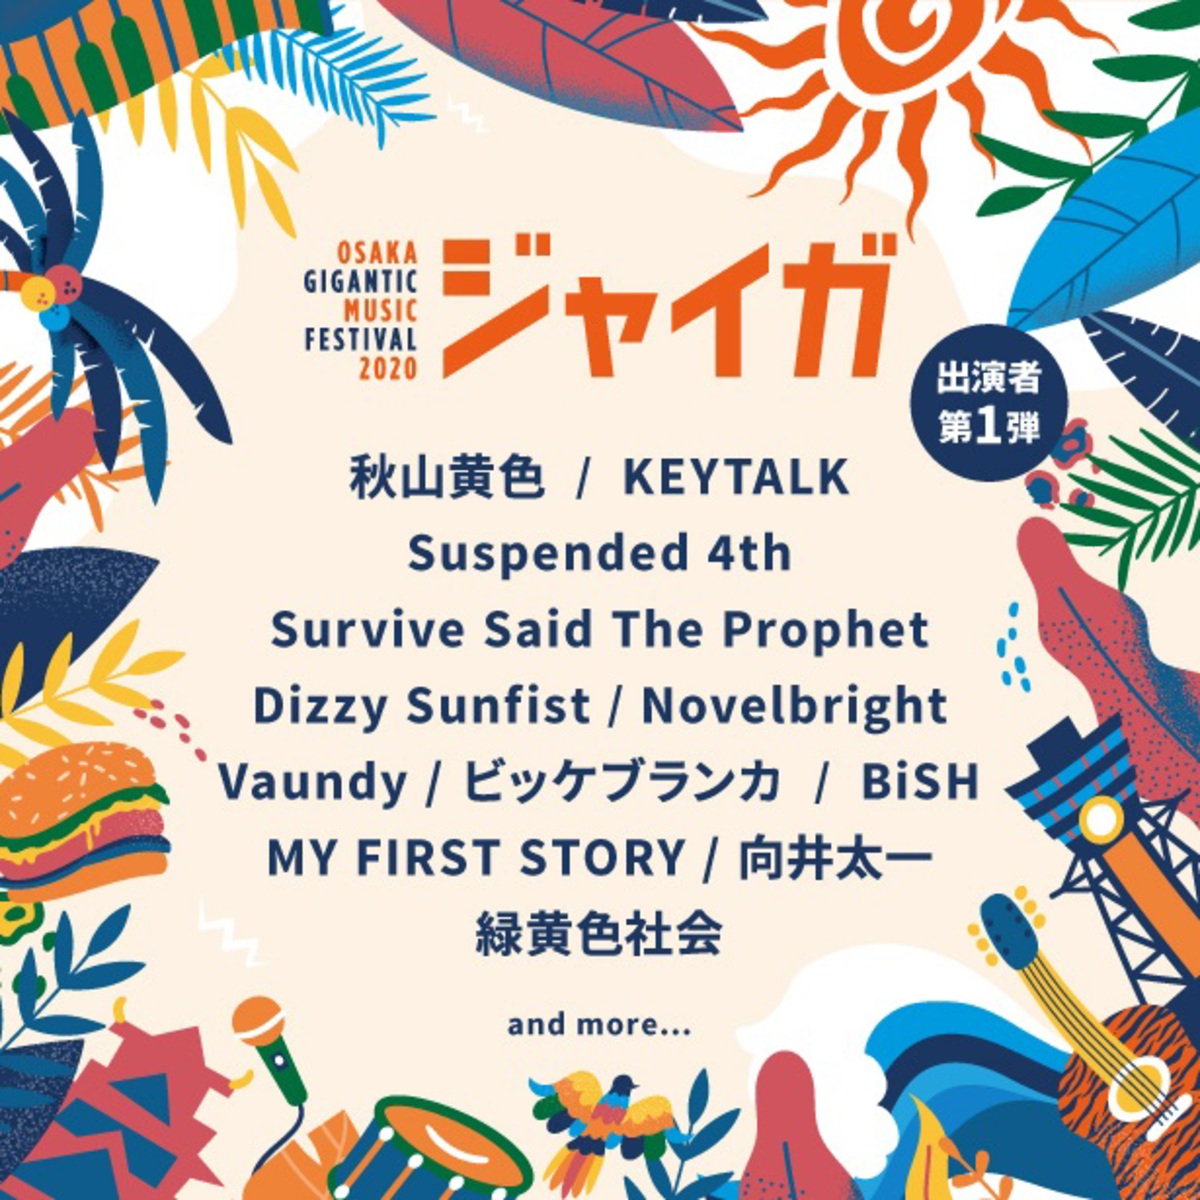 Osaka Gigantic Music Festival ジャイガ 8 1 2開催決定 第1弾出演アーティストでkeytalk Bish ビッケブランカ 緑黄色社会 Novelbrightら発表